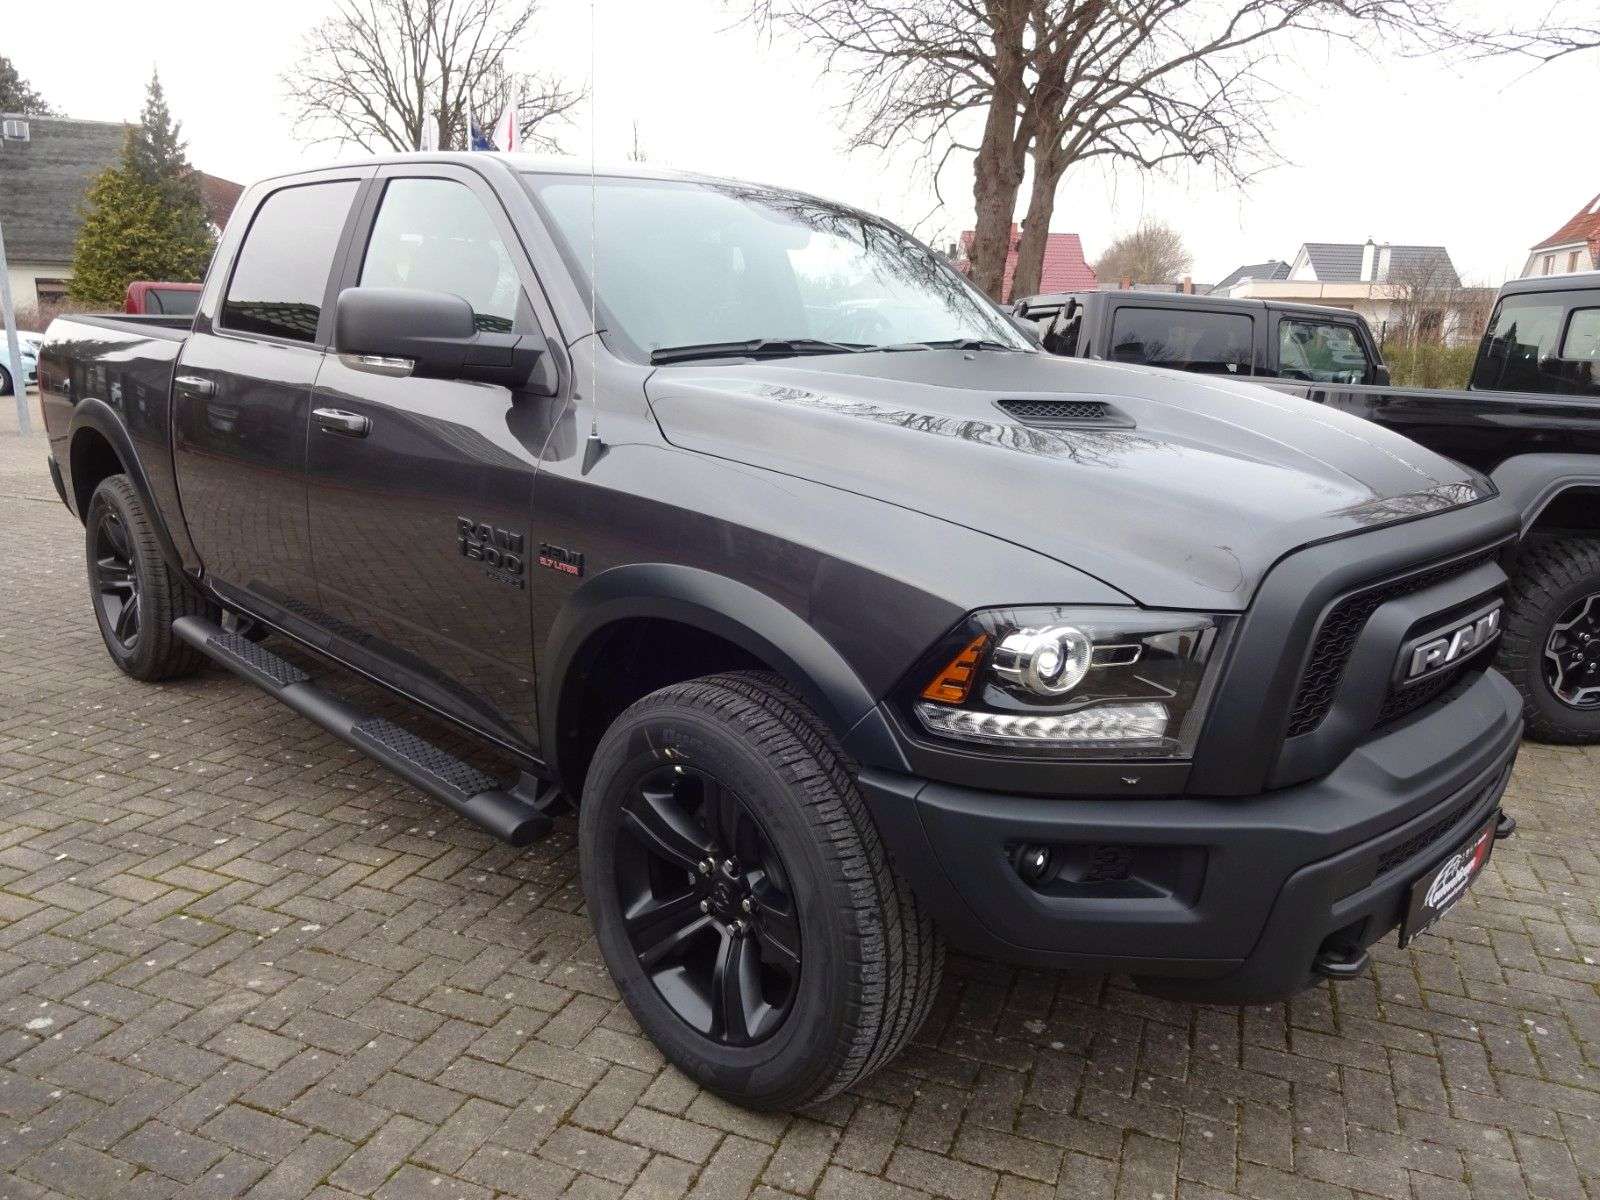 Dodge RAM Off-Road/Pick-up in Grey new in Elmenhorst for € 62,990.-